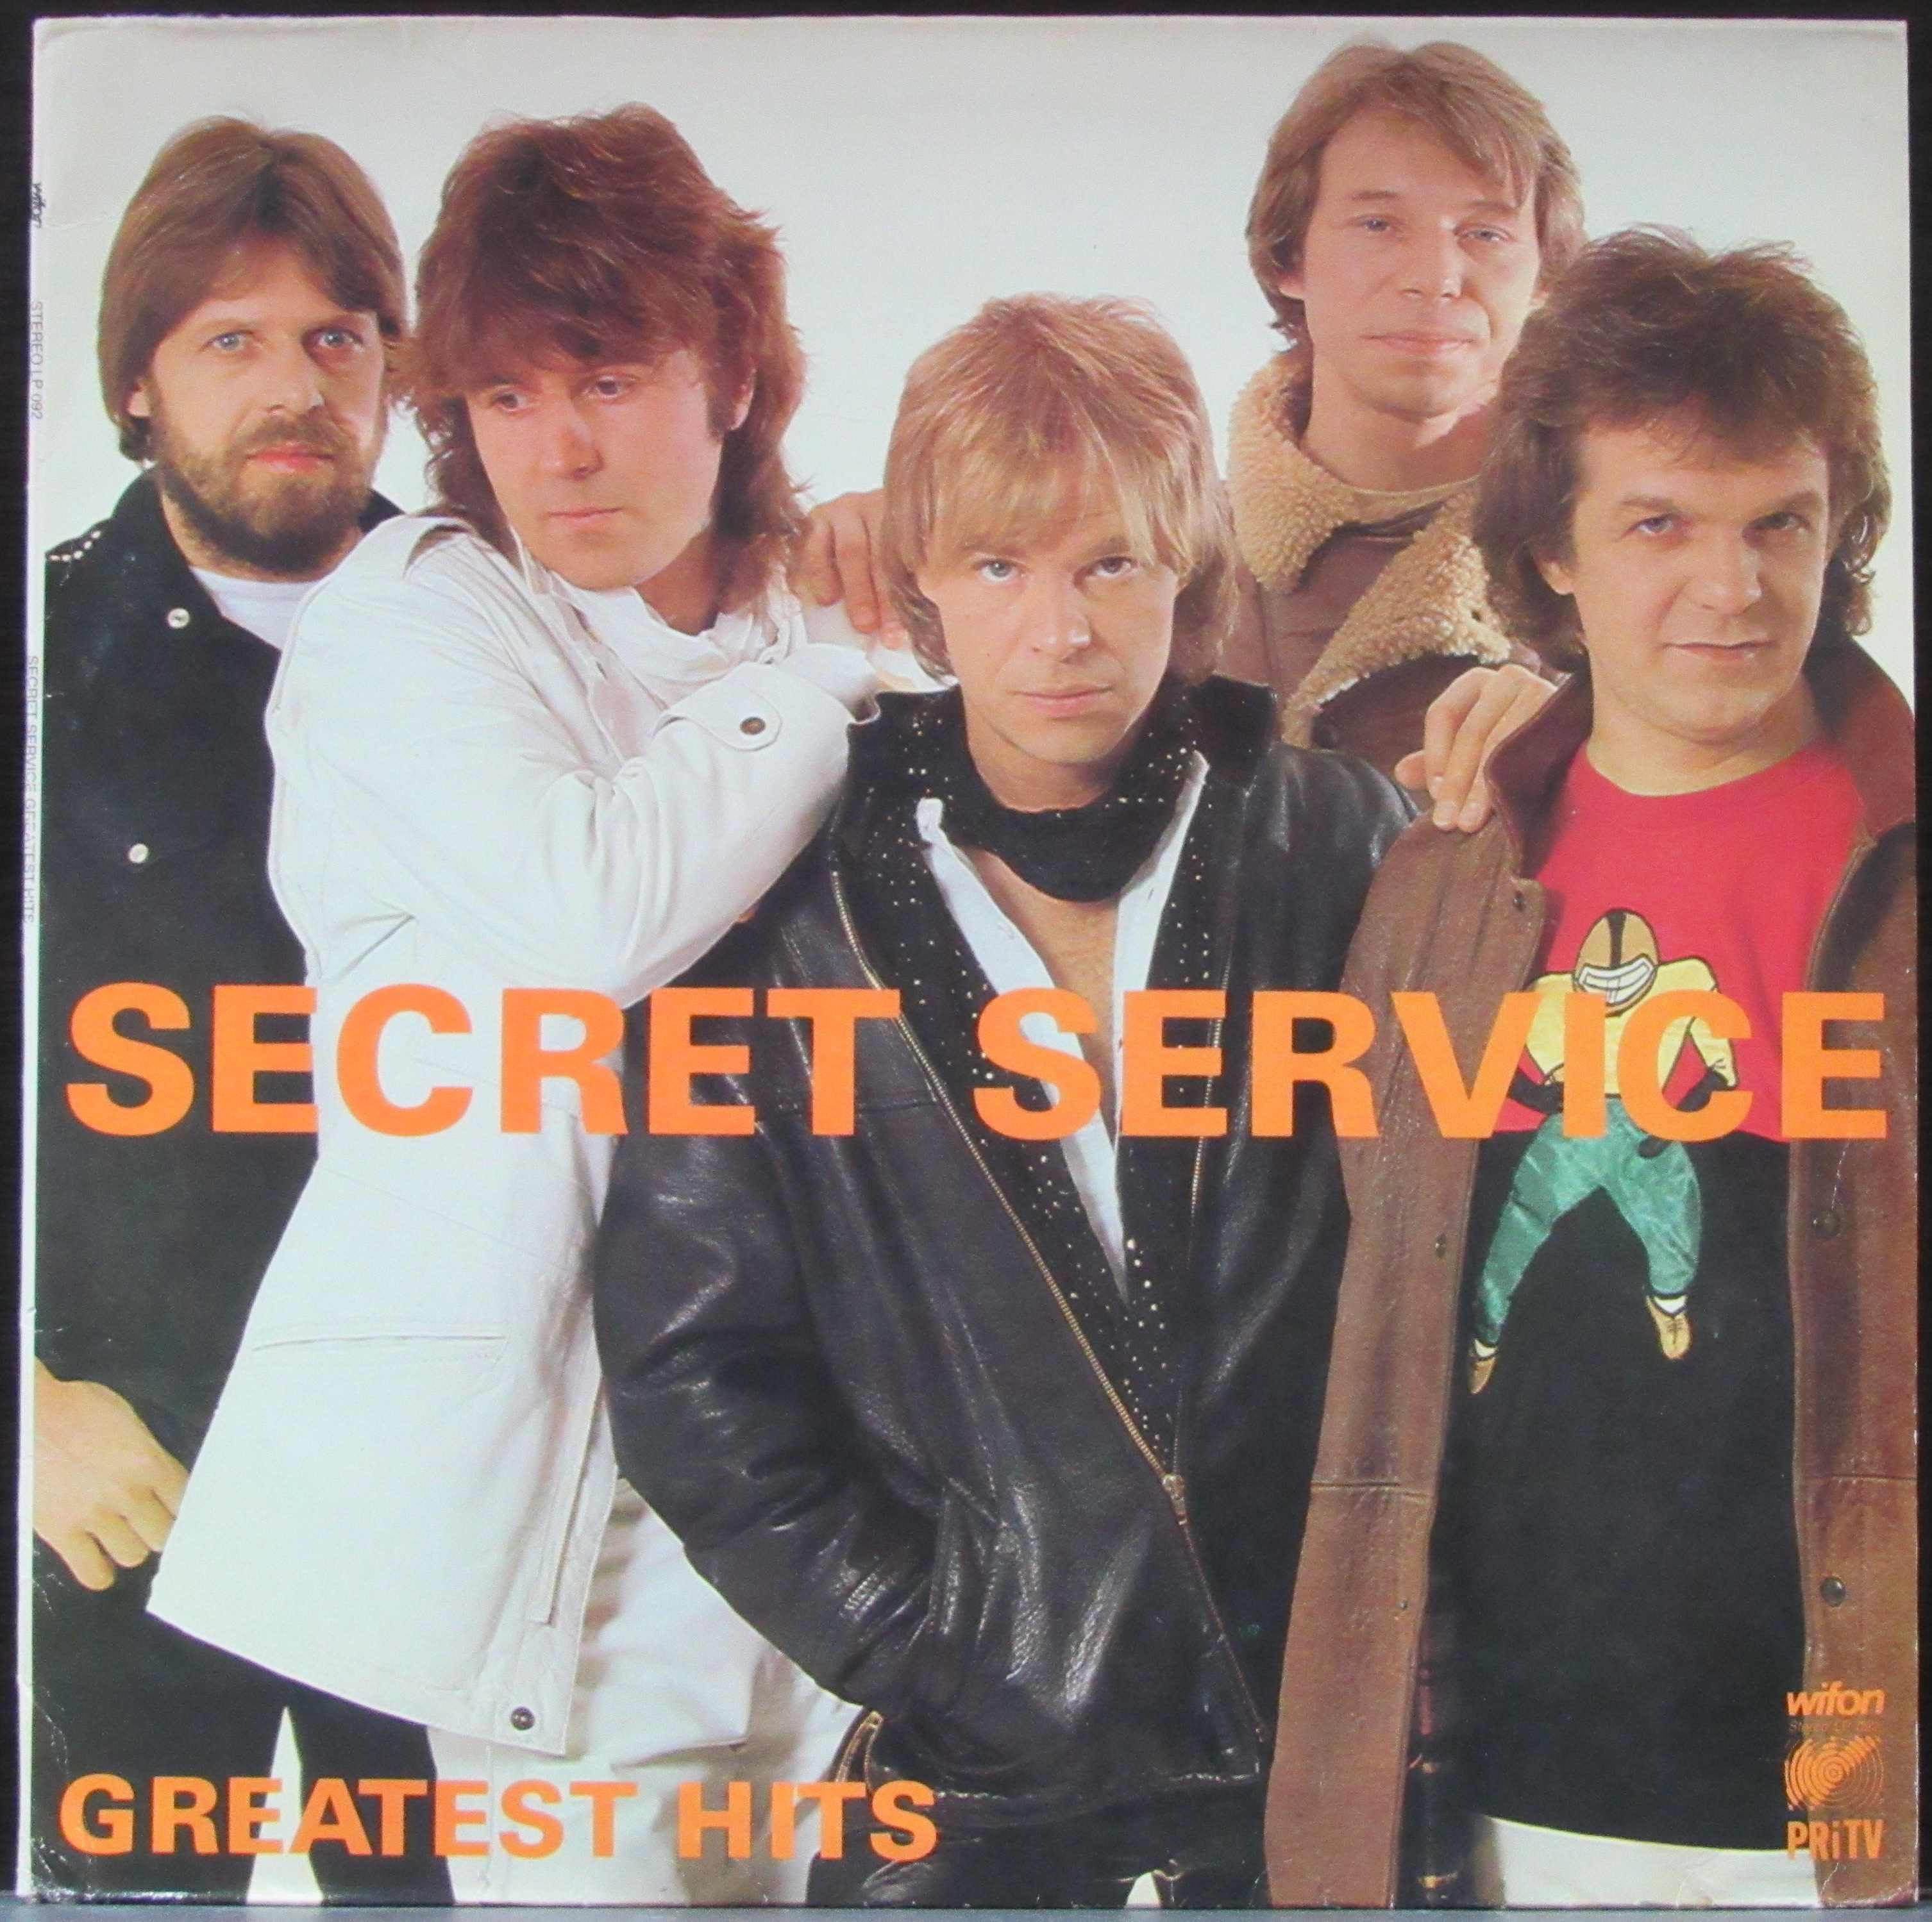 Сикрет сервис. Группа Secret service. Secret service 1986 Greatest Hits. Secret service фото группы. Группа Secret service в молодости.